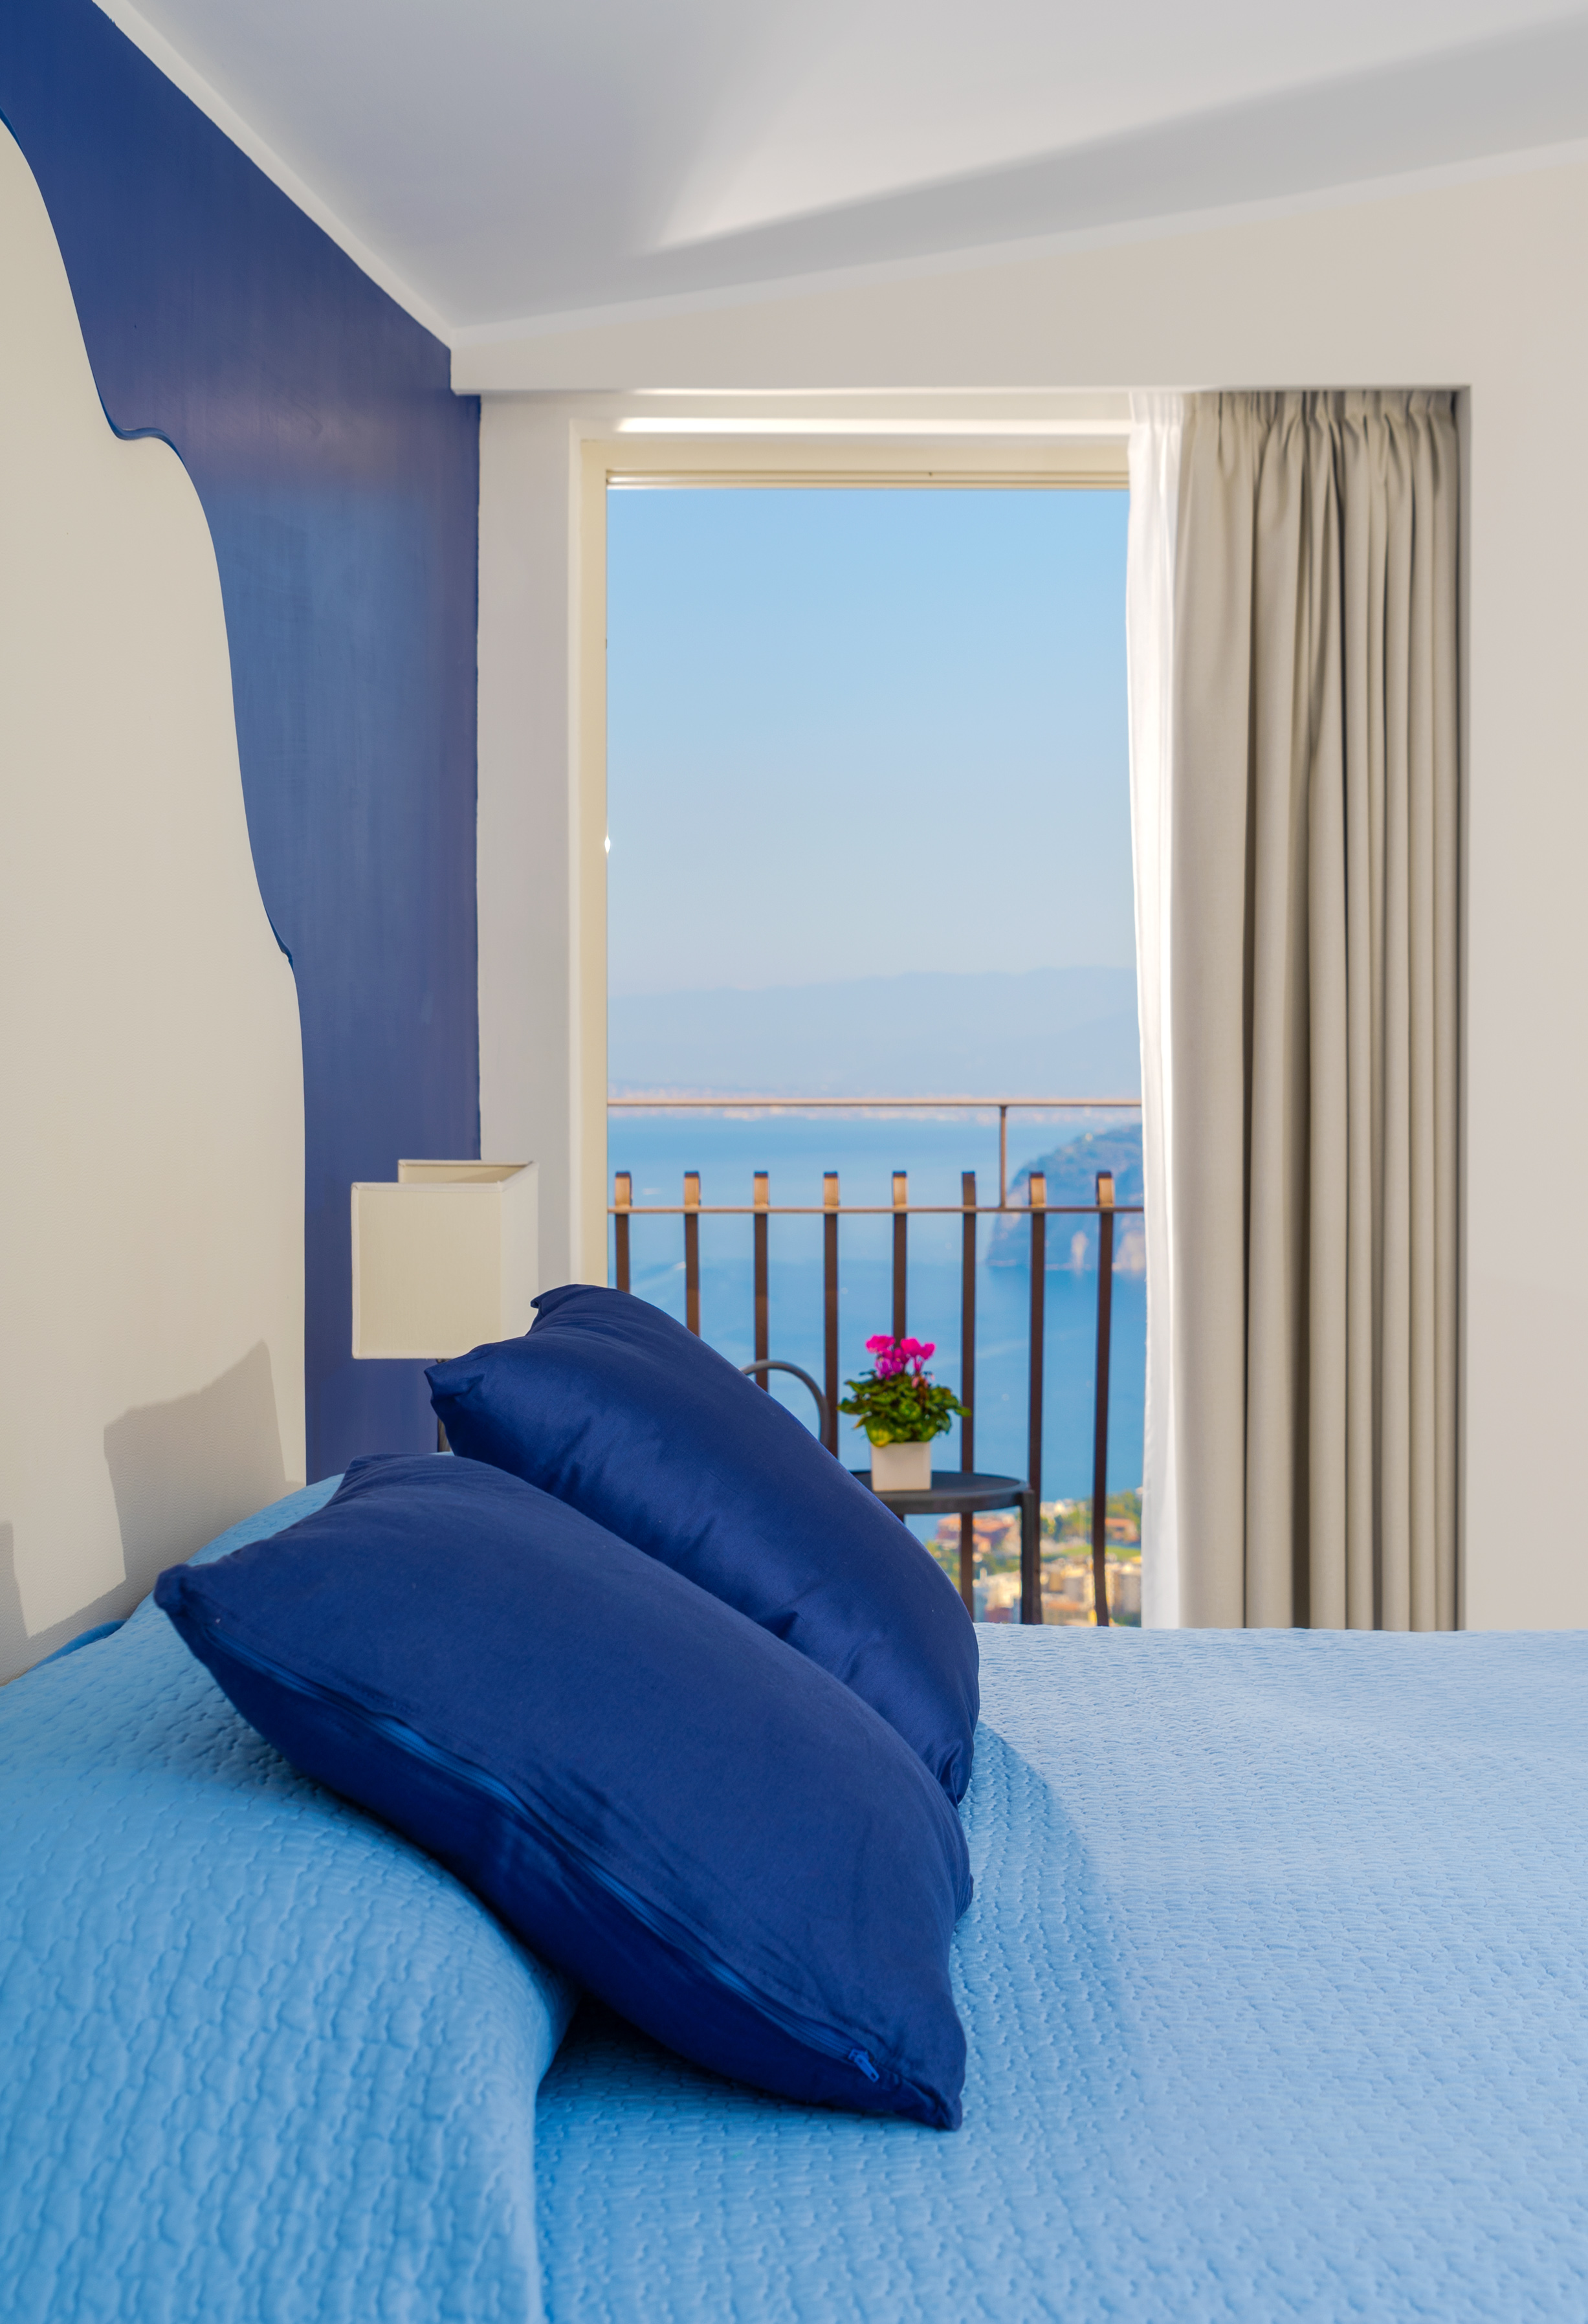 Deluxe Double Room Vesuvius view with balcony overlooking the sea - 7